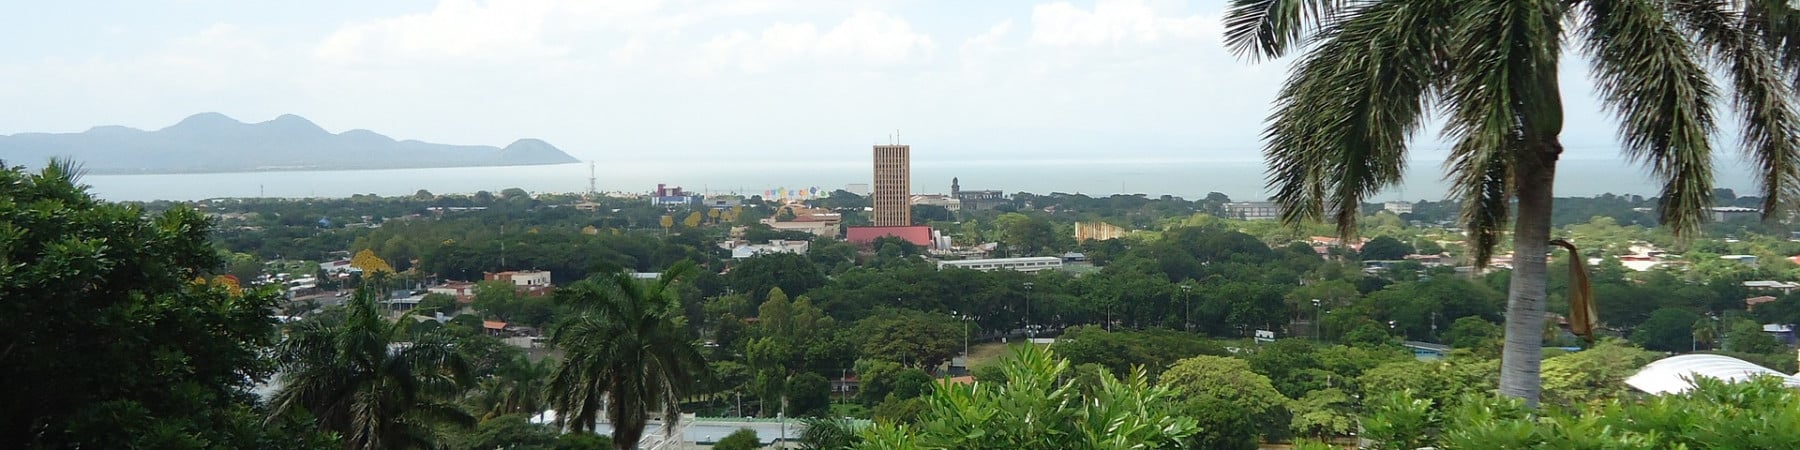 Managua (Nicaragua). Pixabay.